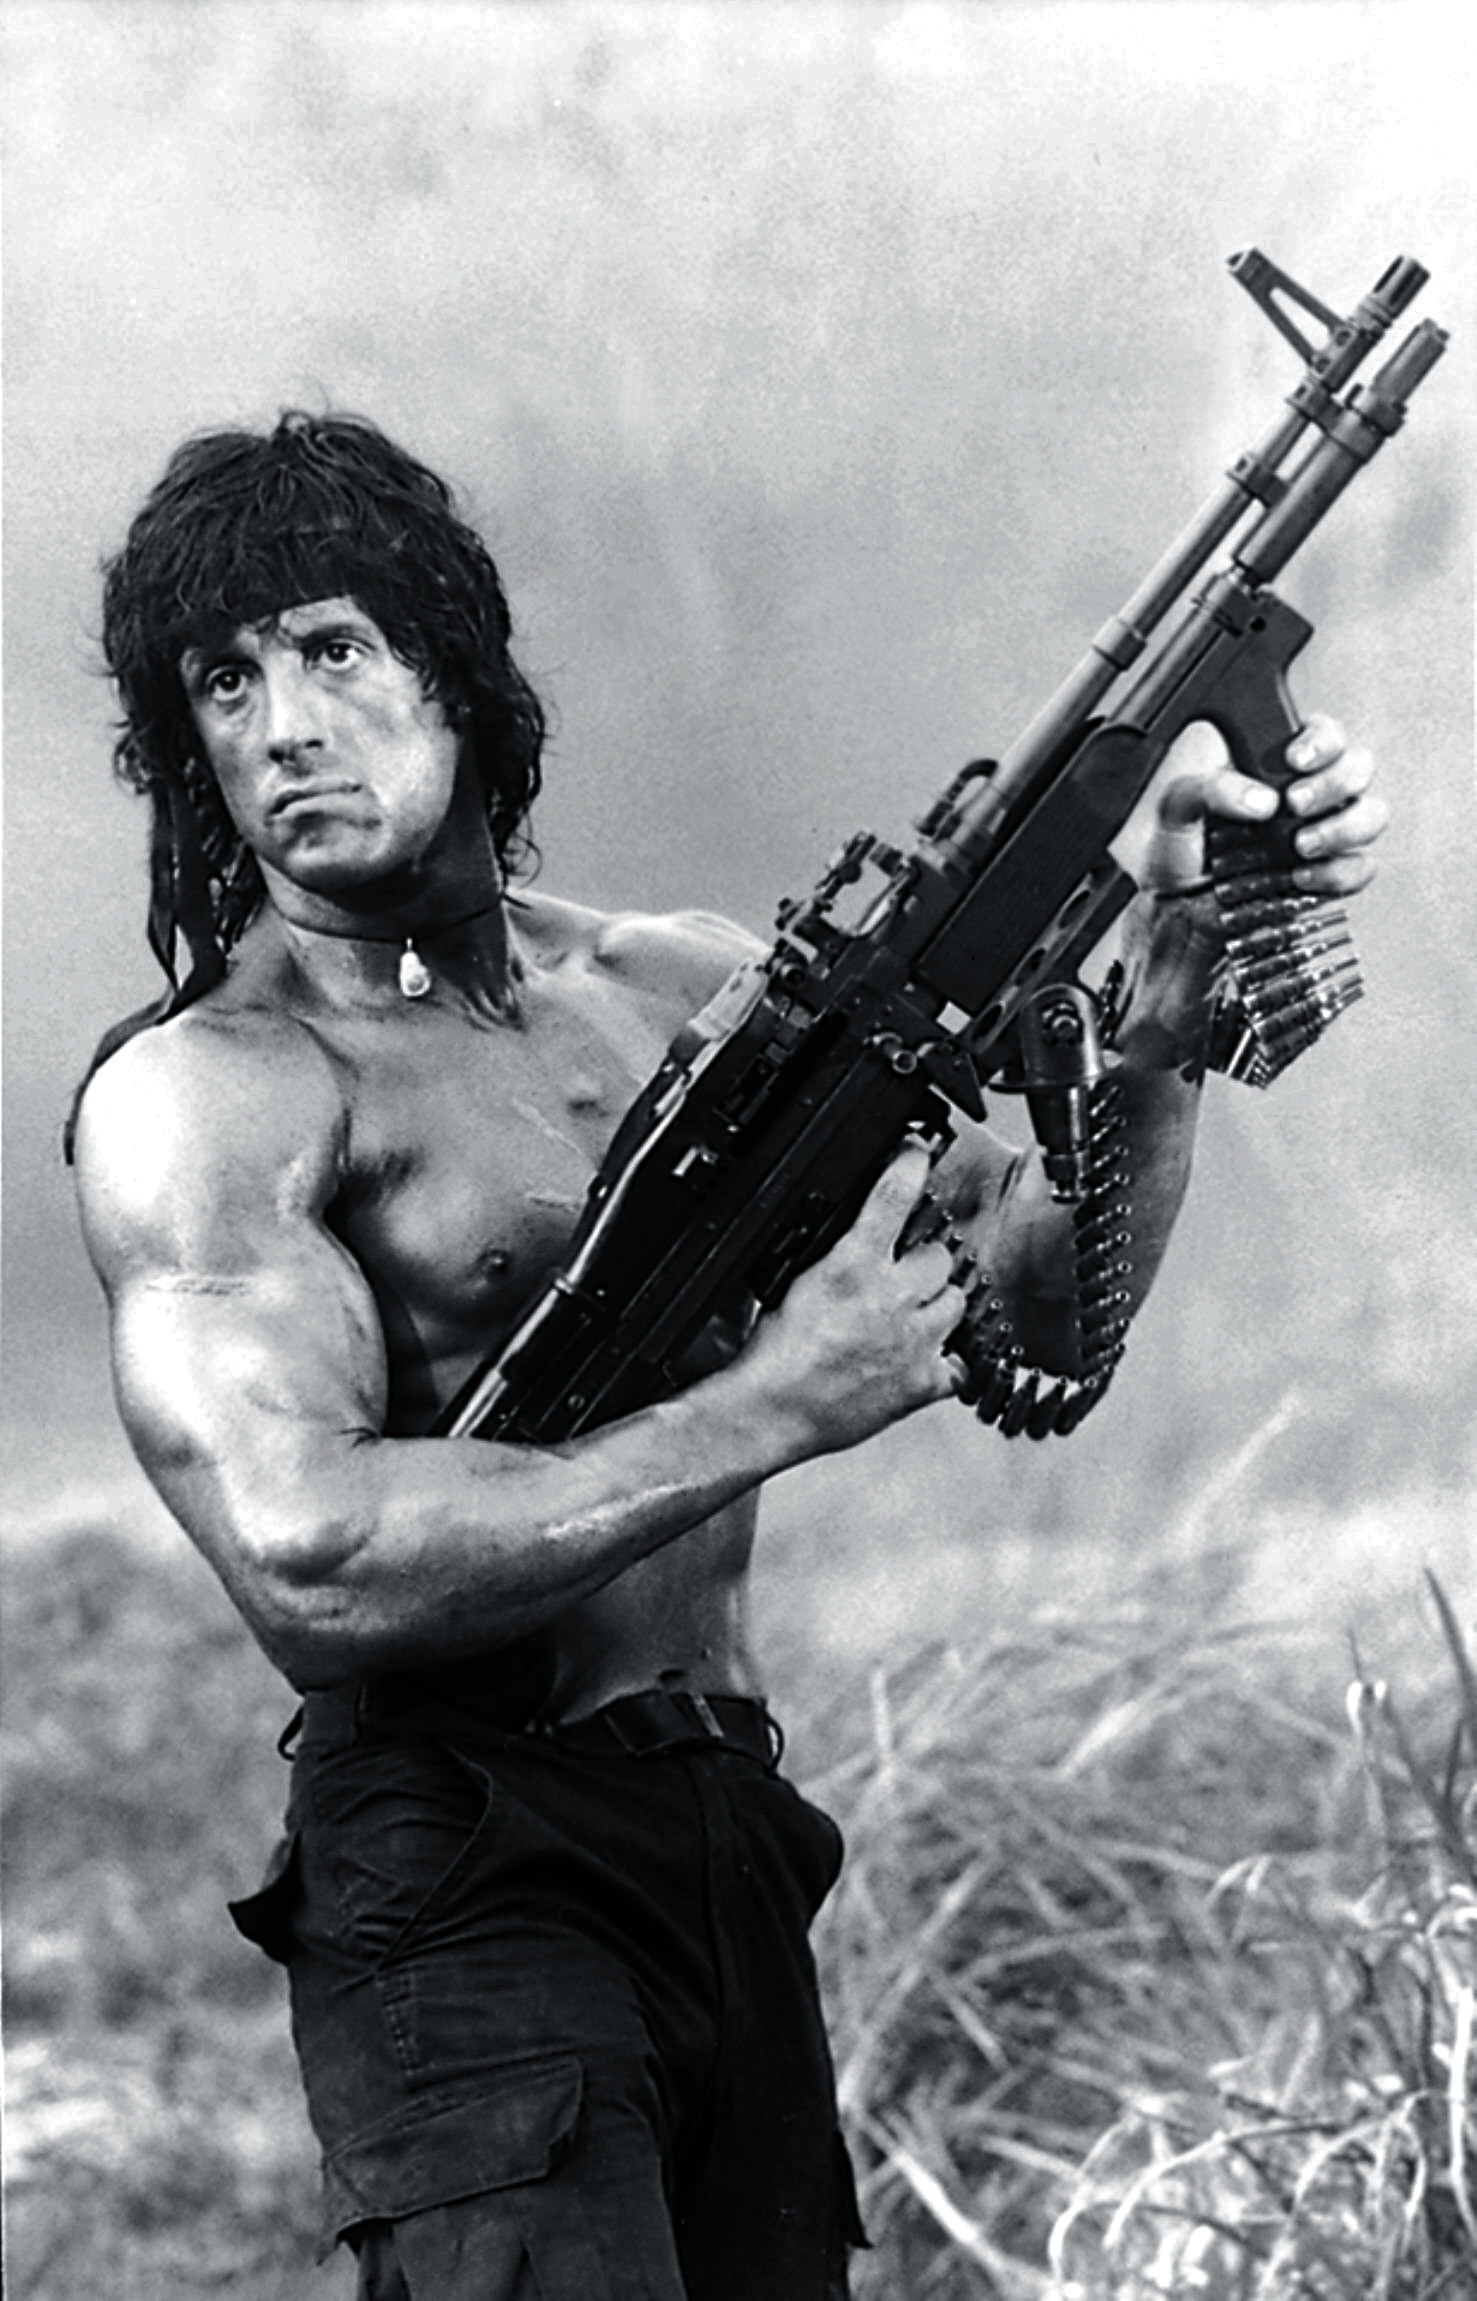 Kadr z filmu „Rambo II” (1985), reż. George Pan Cosmatos